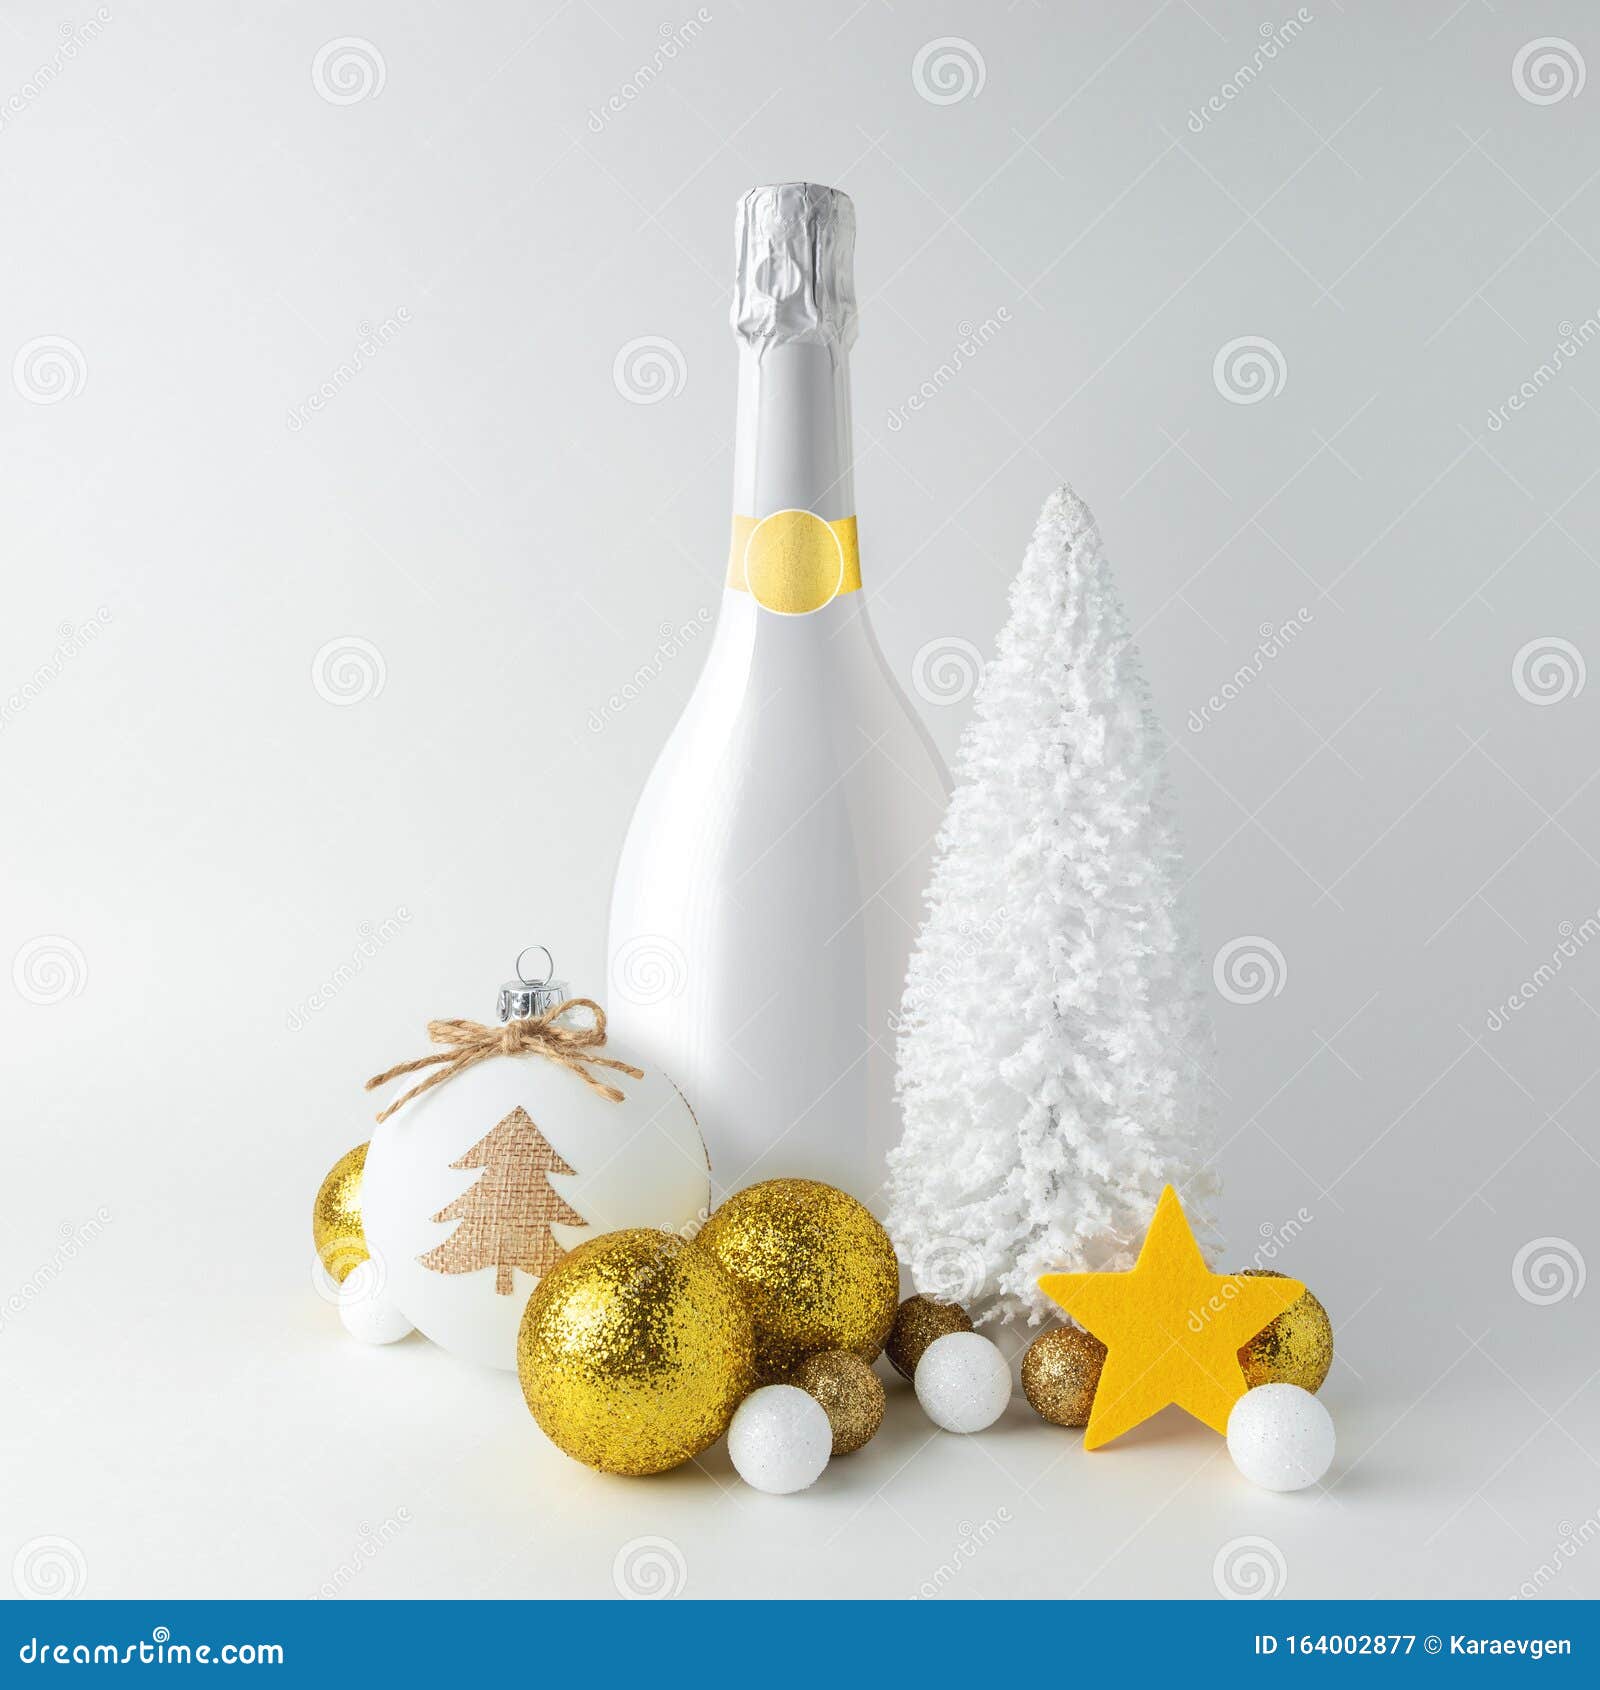 Decoration nouvel an champagne blanche et or